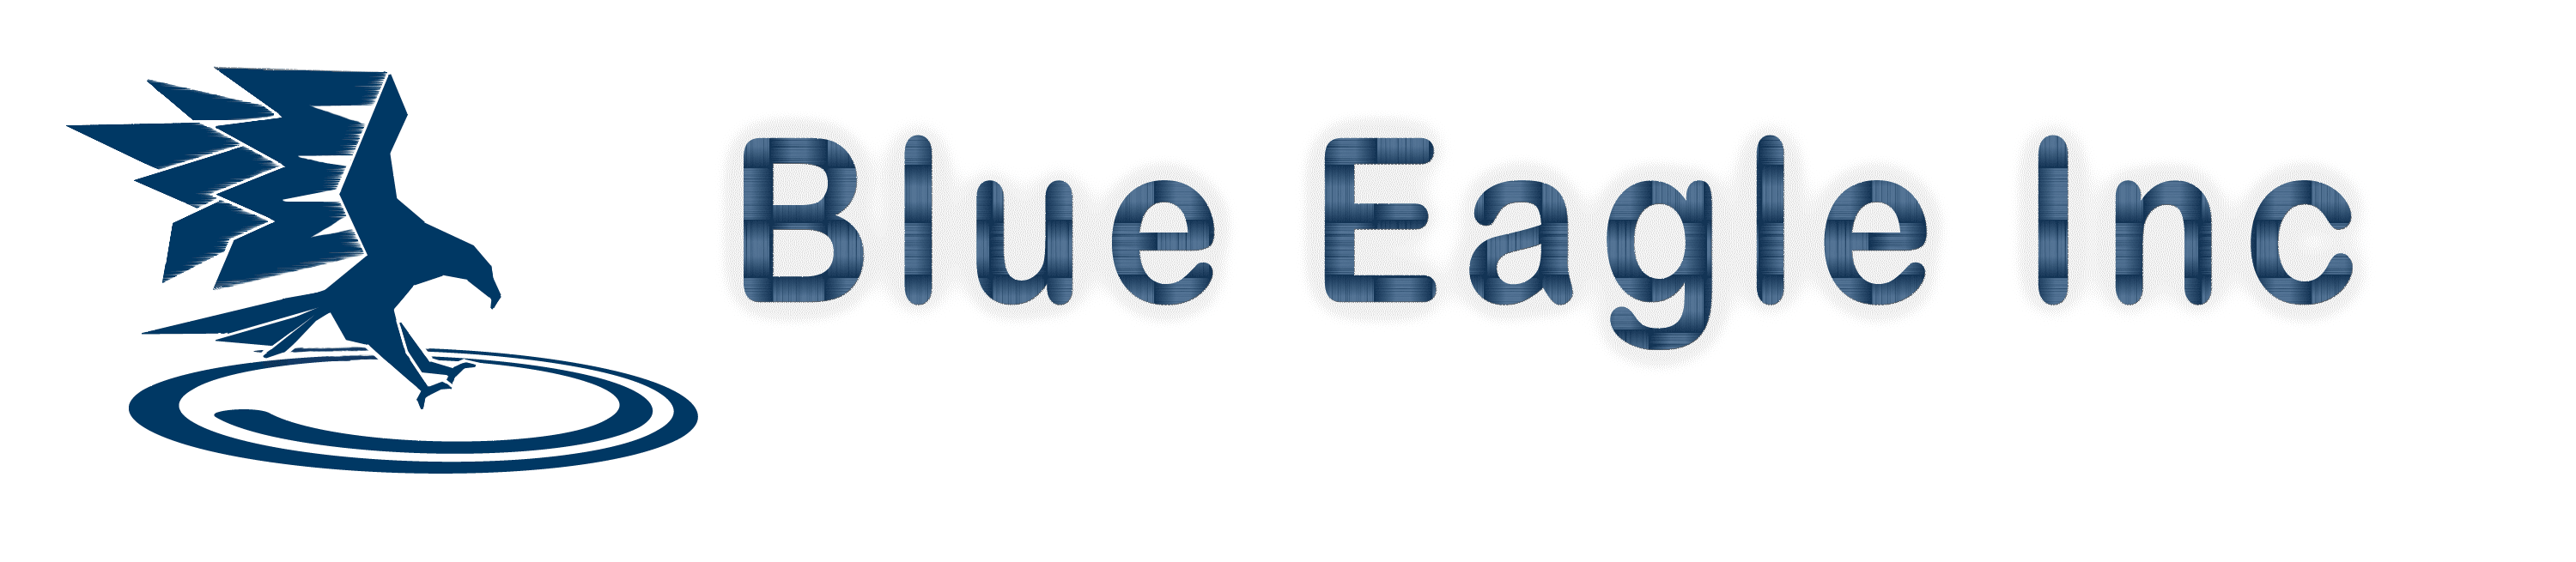 Blue Eagle Company Logo - Home - Blue Eagle Inc